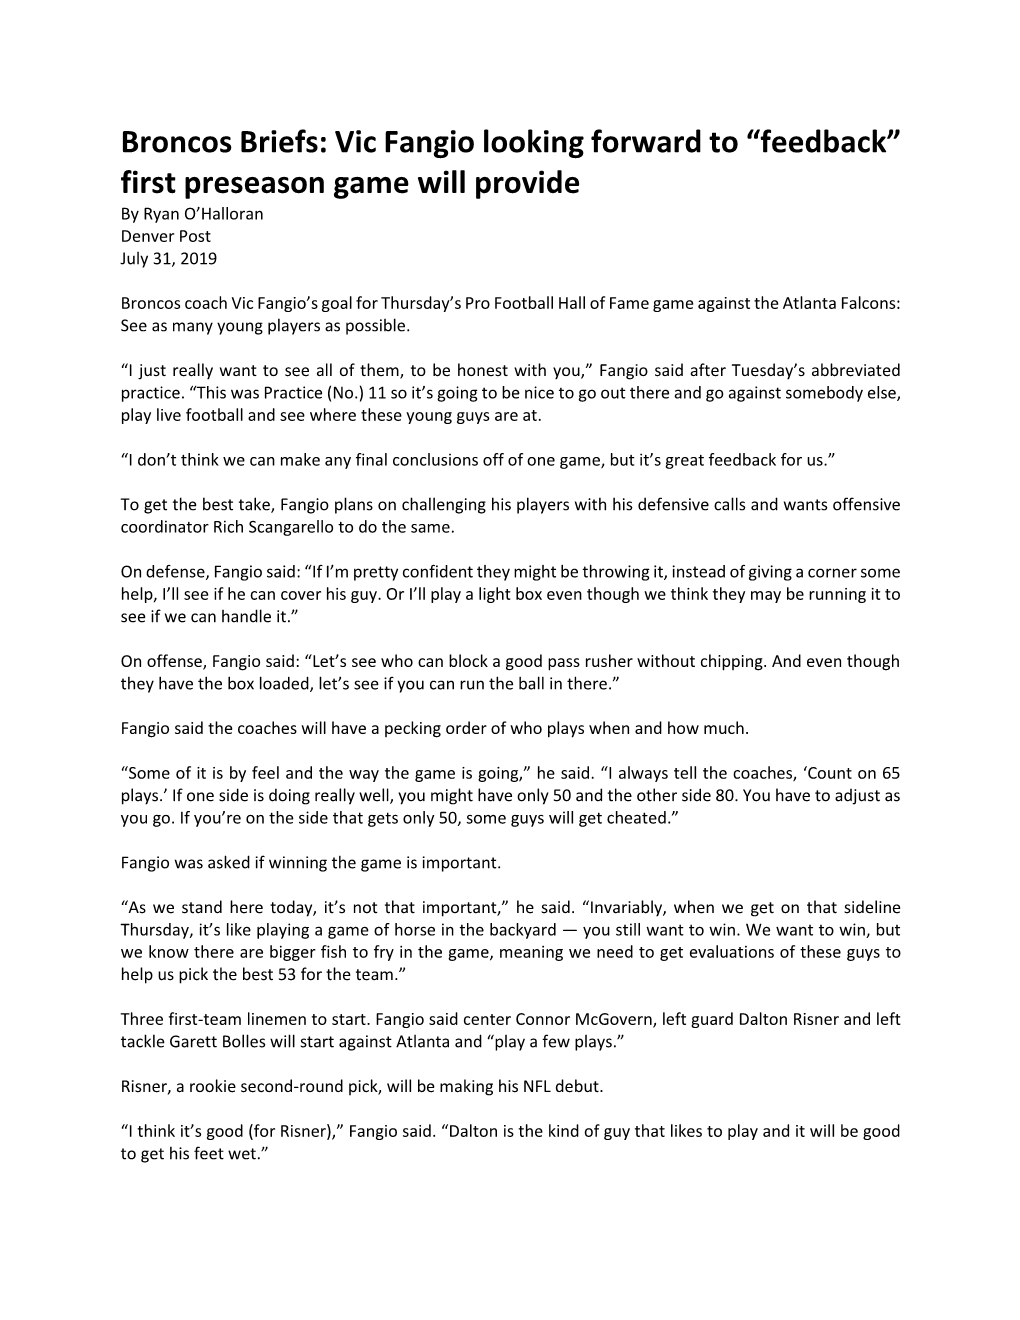 Broncos Briefs: Vic Fangio Looking Forward to “Feedback” First Preseason Game Will Provide by Ryan O’Halloran Denver Post July 31, 2019